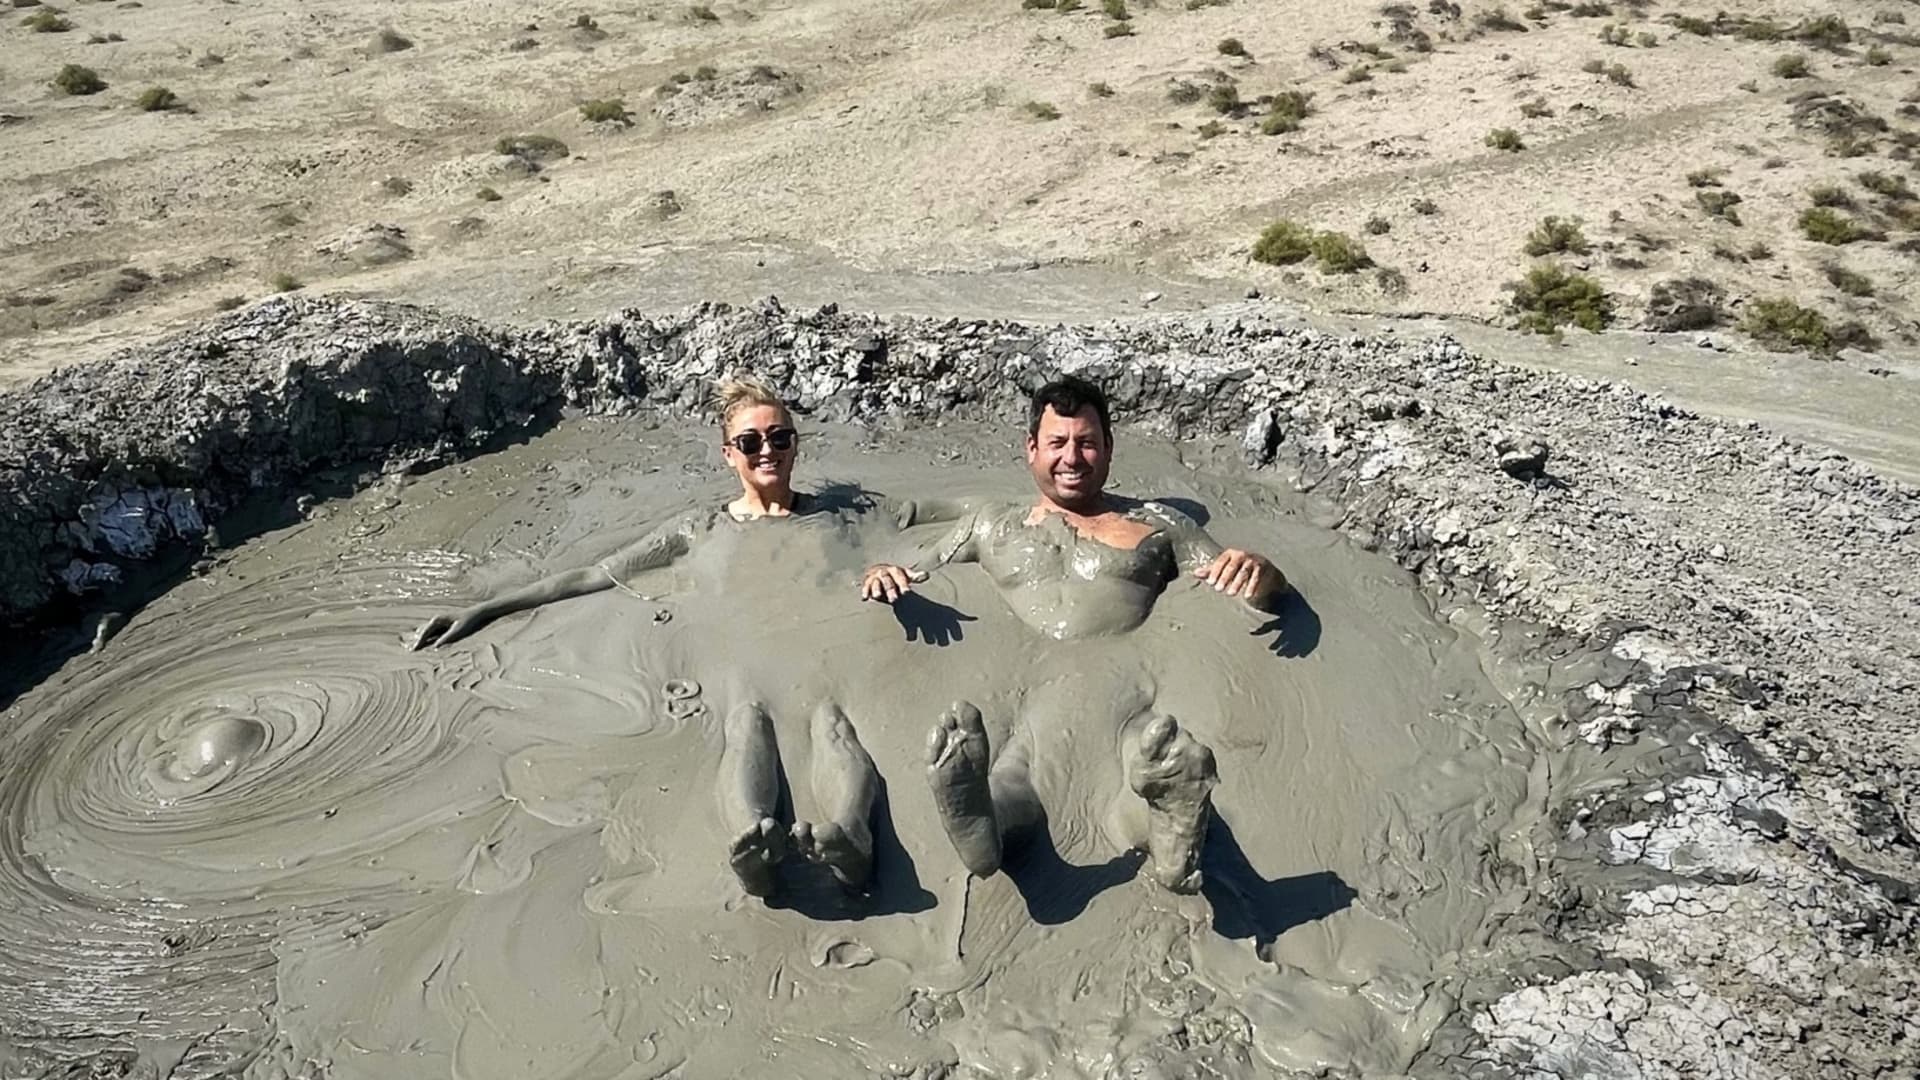 Miller and Feldman splashing in Azerbaijani mud bath.